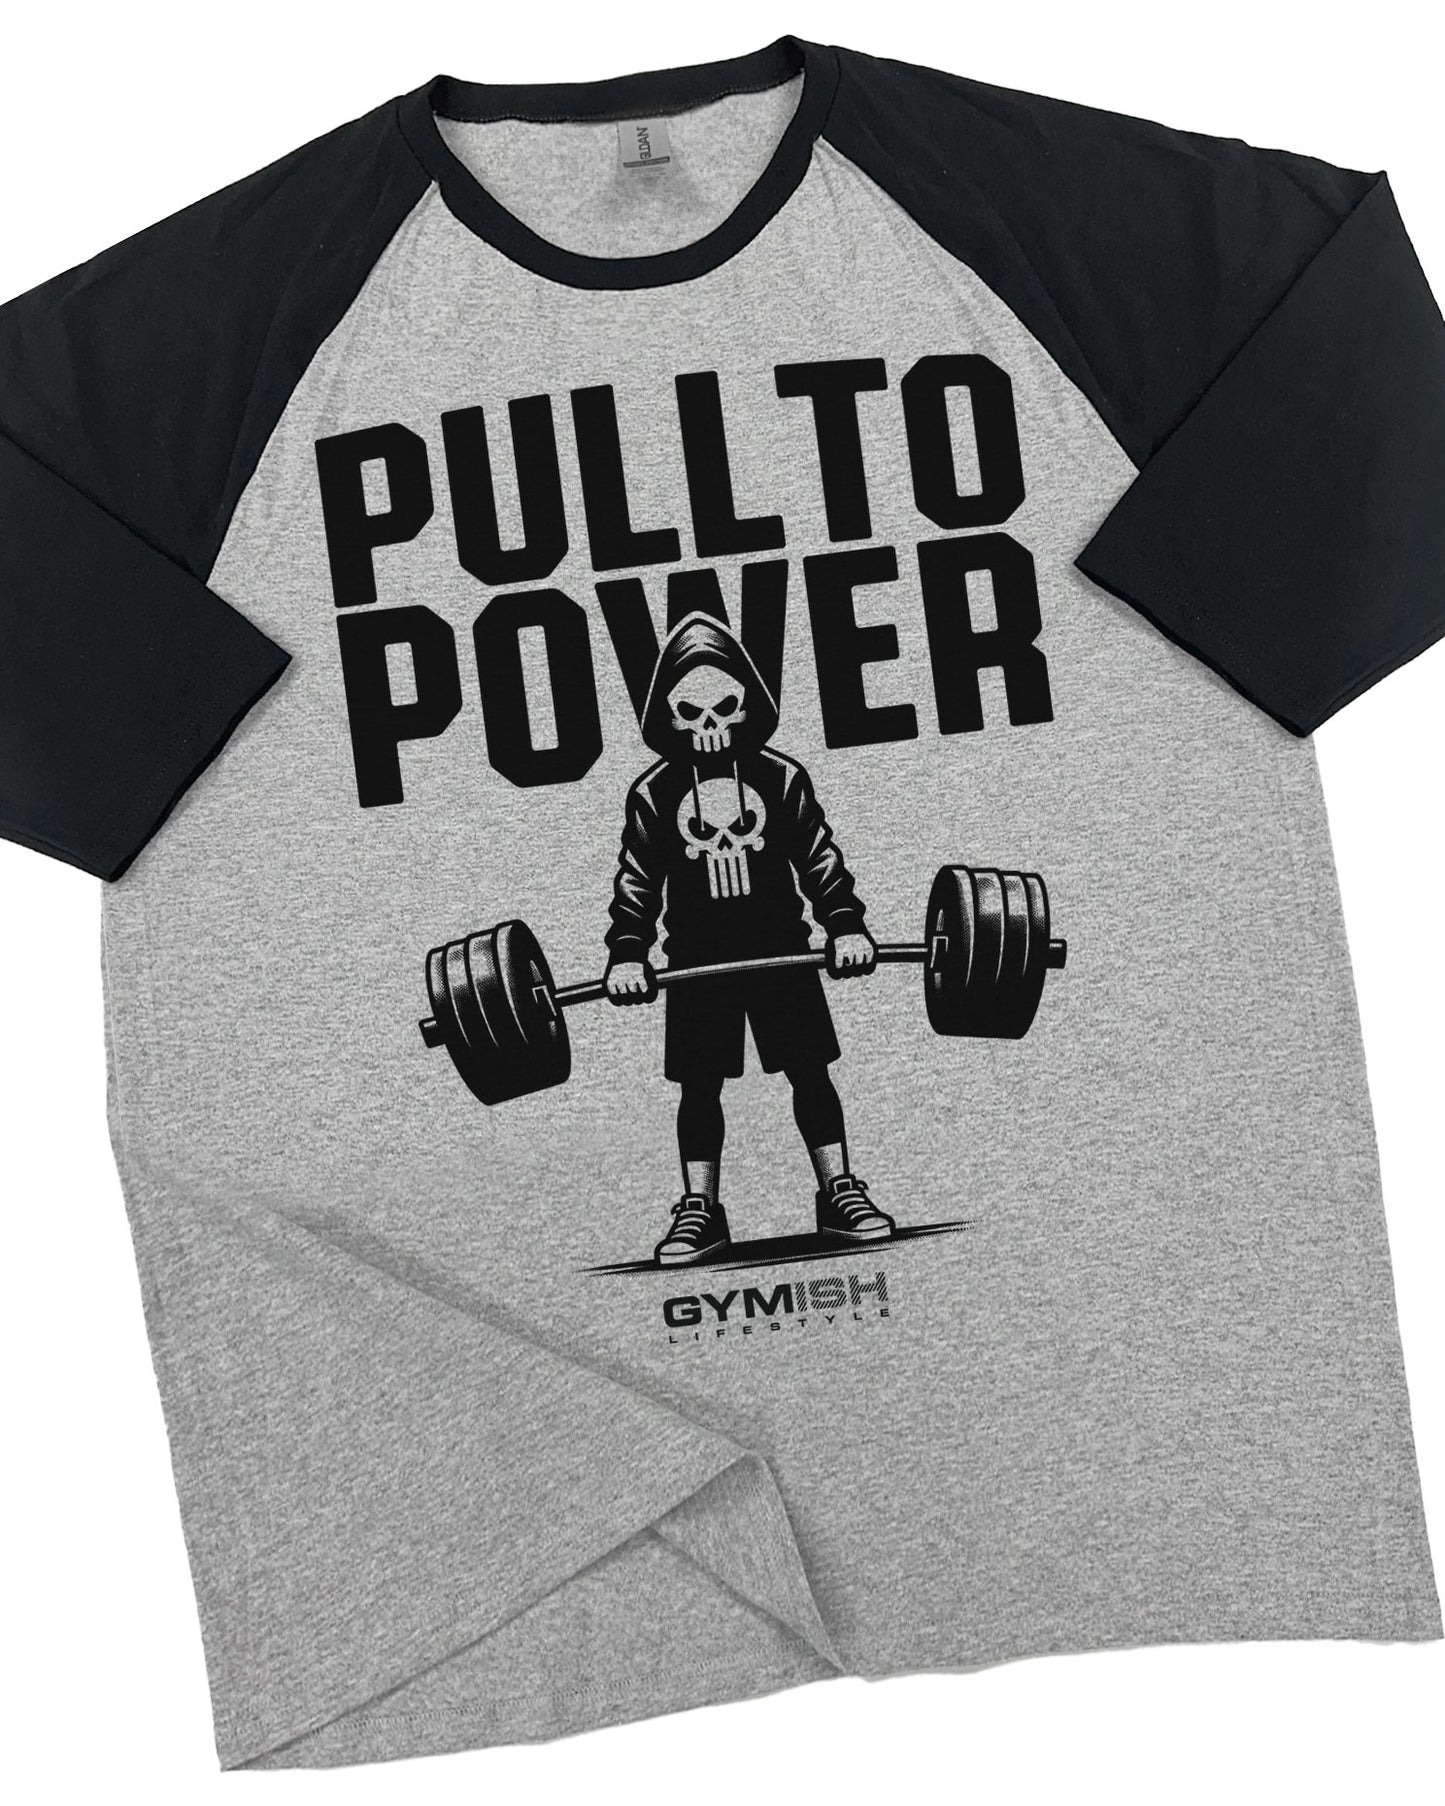 096- RAGLAN Pull To Power Workout Gym T-Shirt for Men